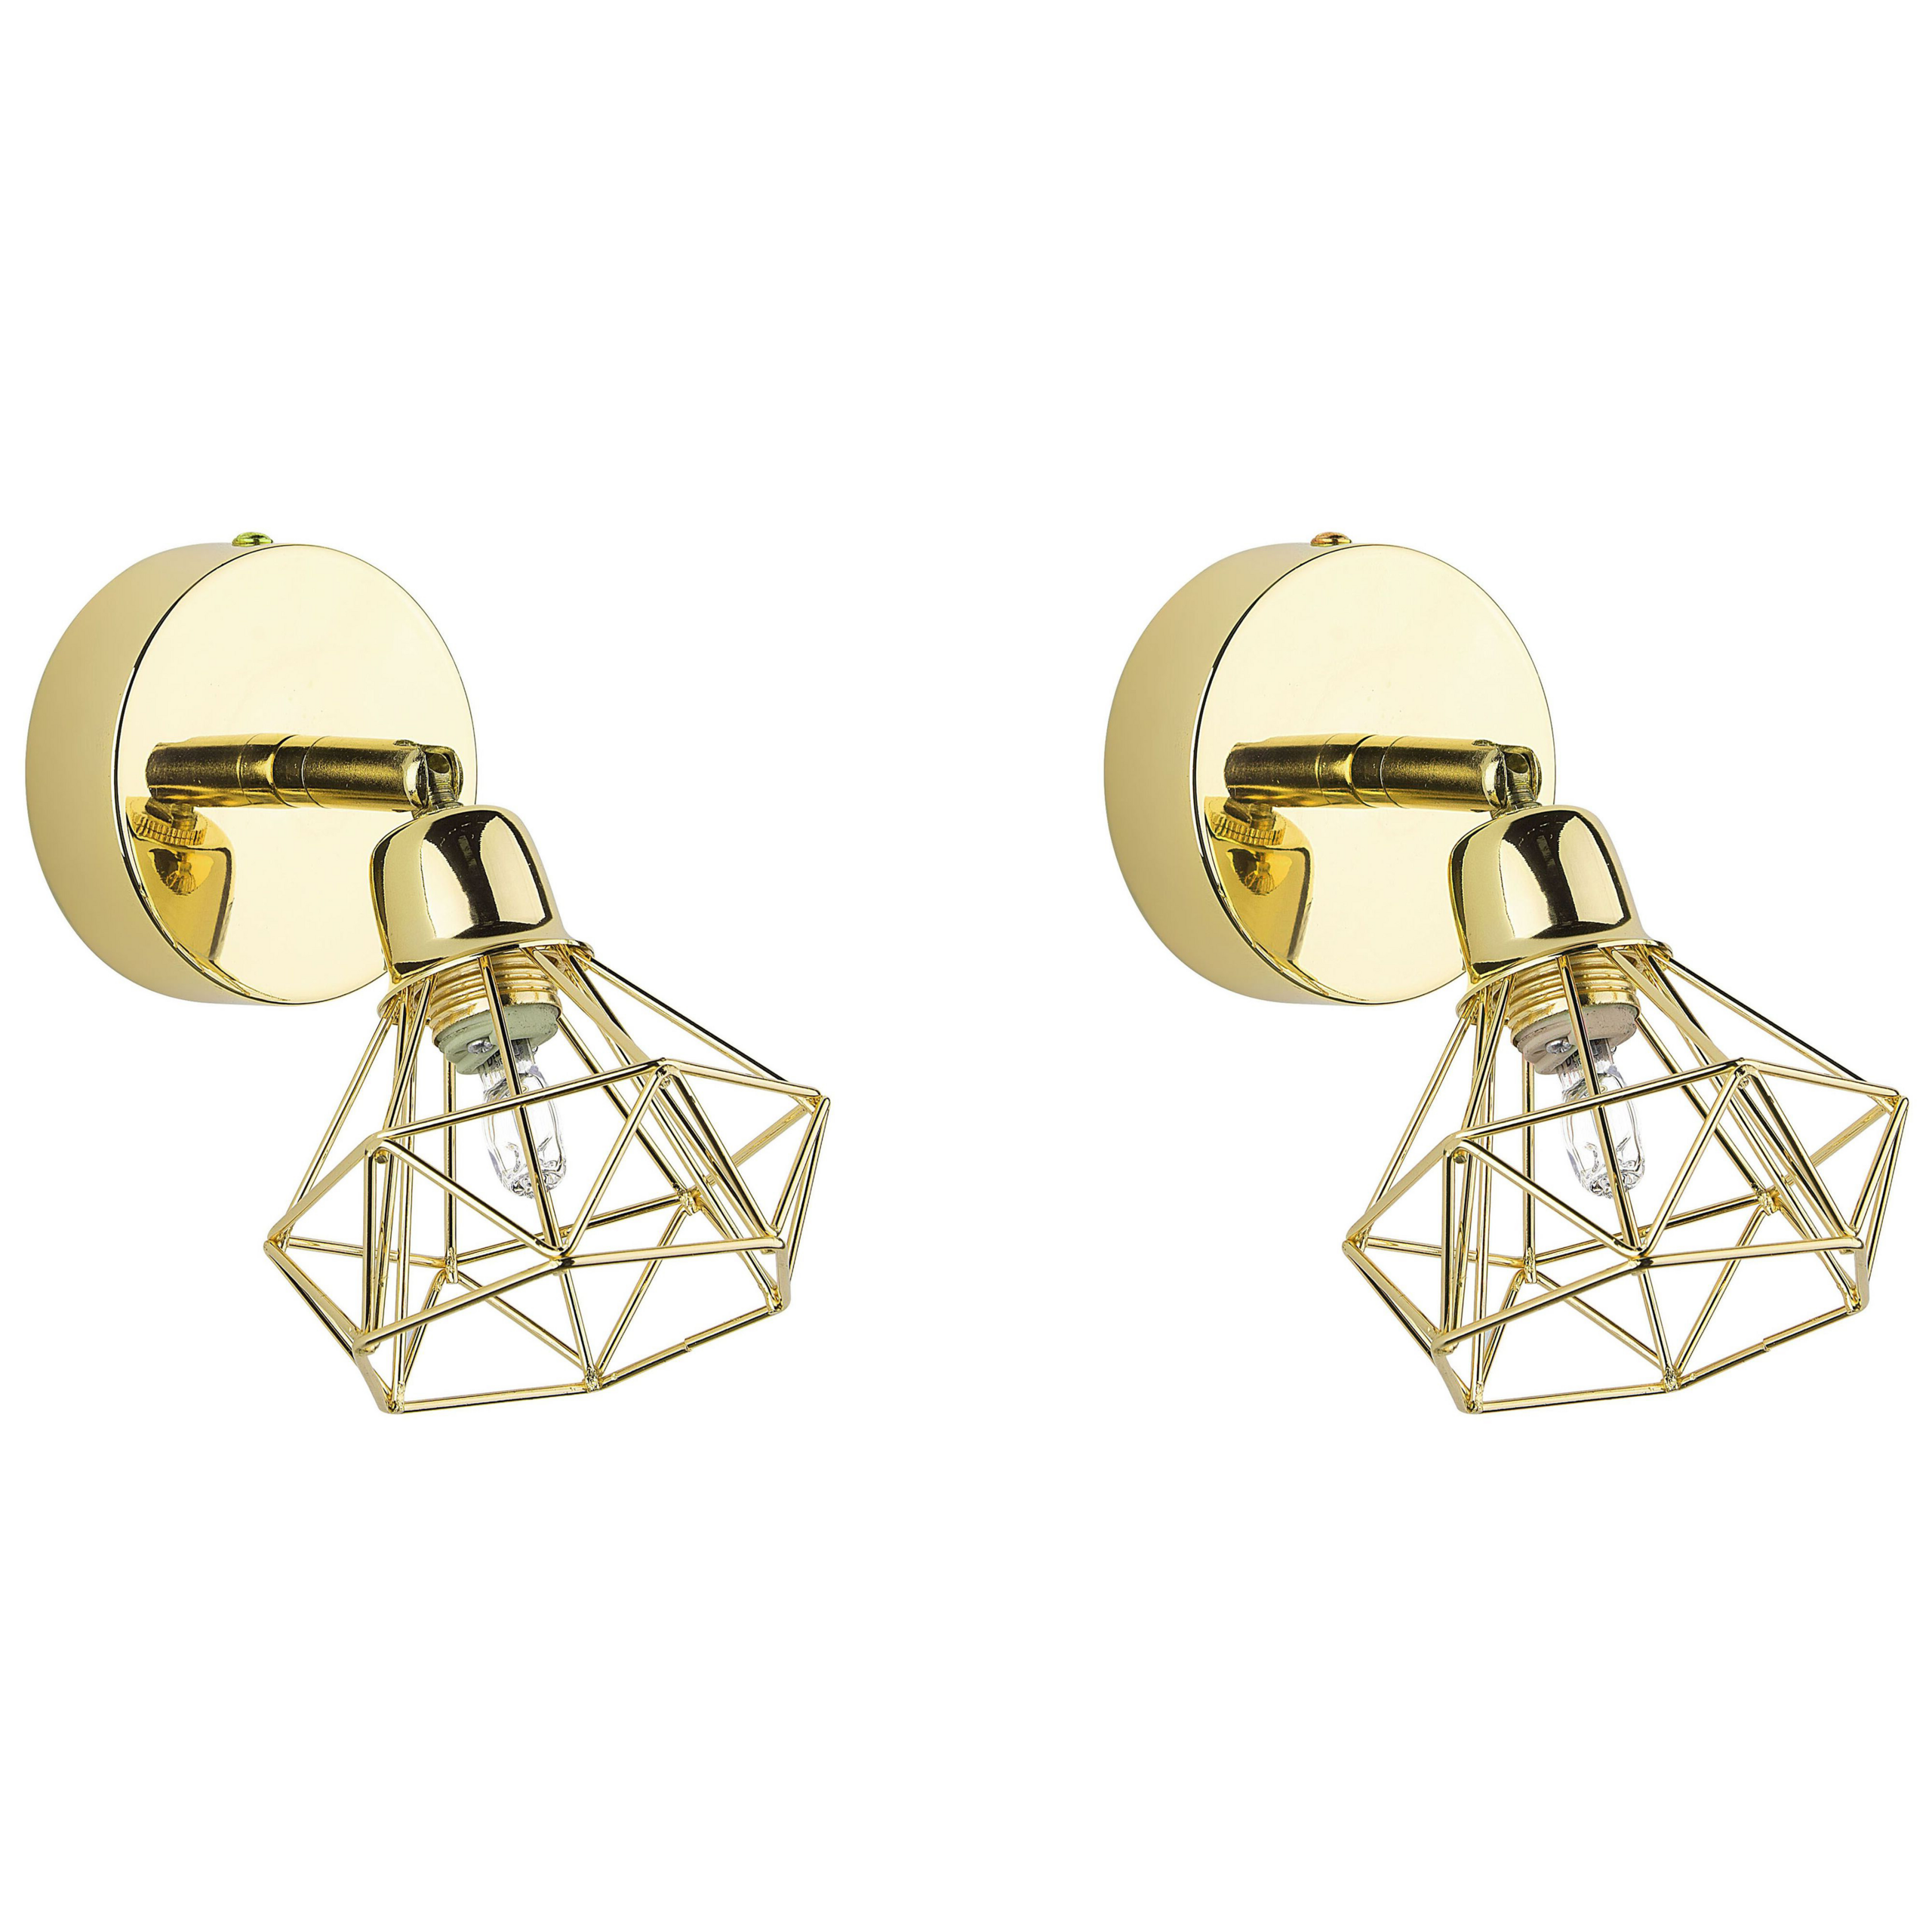 Beliani Set of 2 Wall Lamp Gold Metal Cage Shade Adjustable Light Position Modern